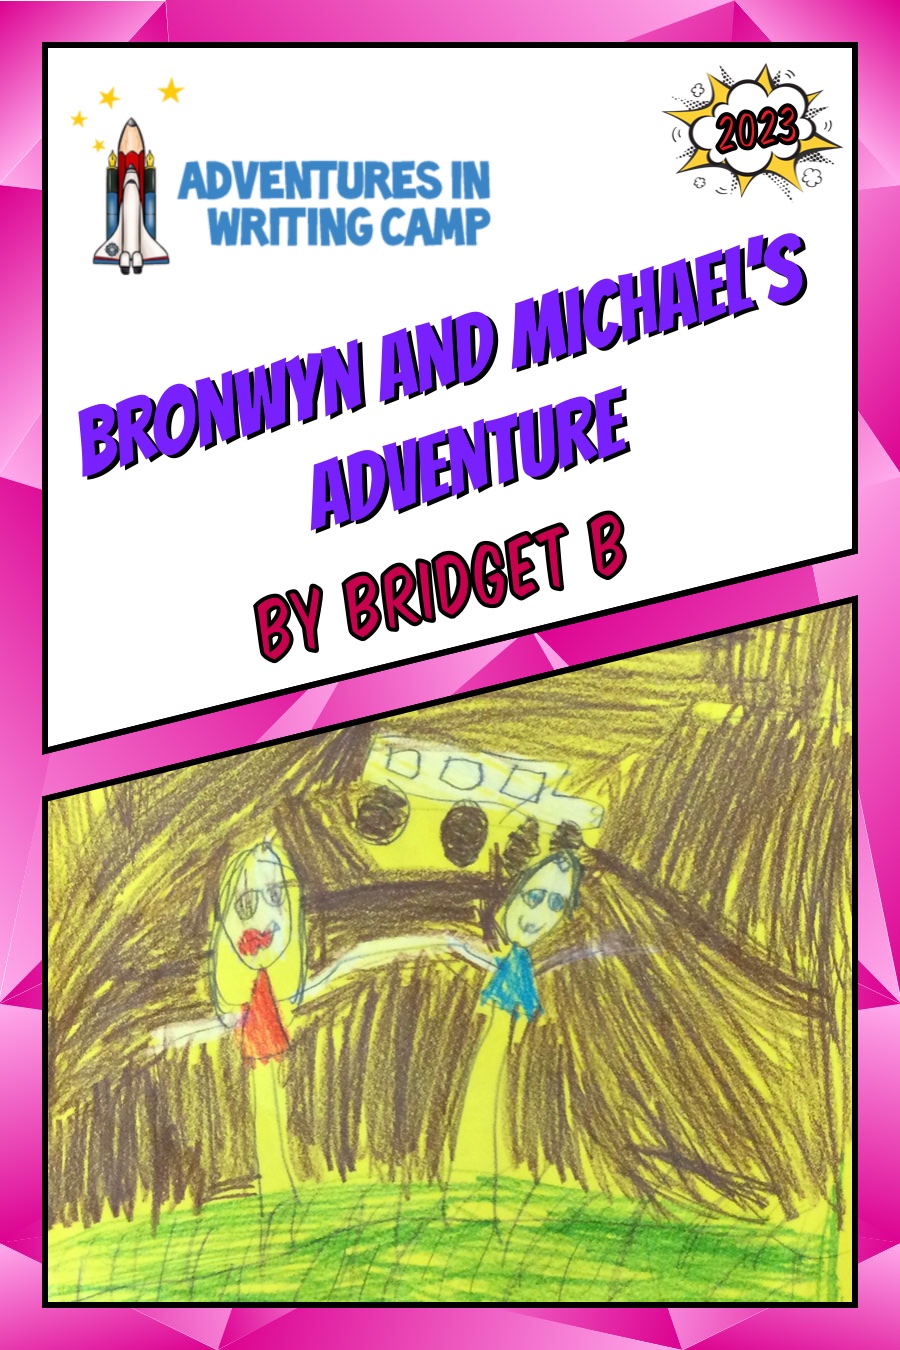 Bronwyn and Michaels Adventure by Bridget B